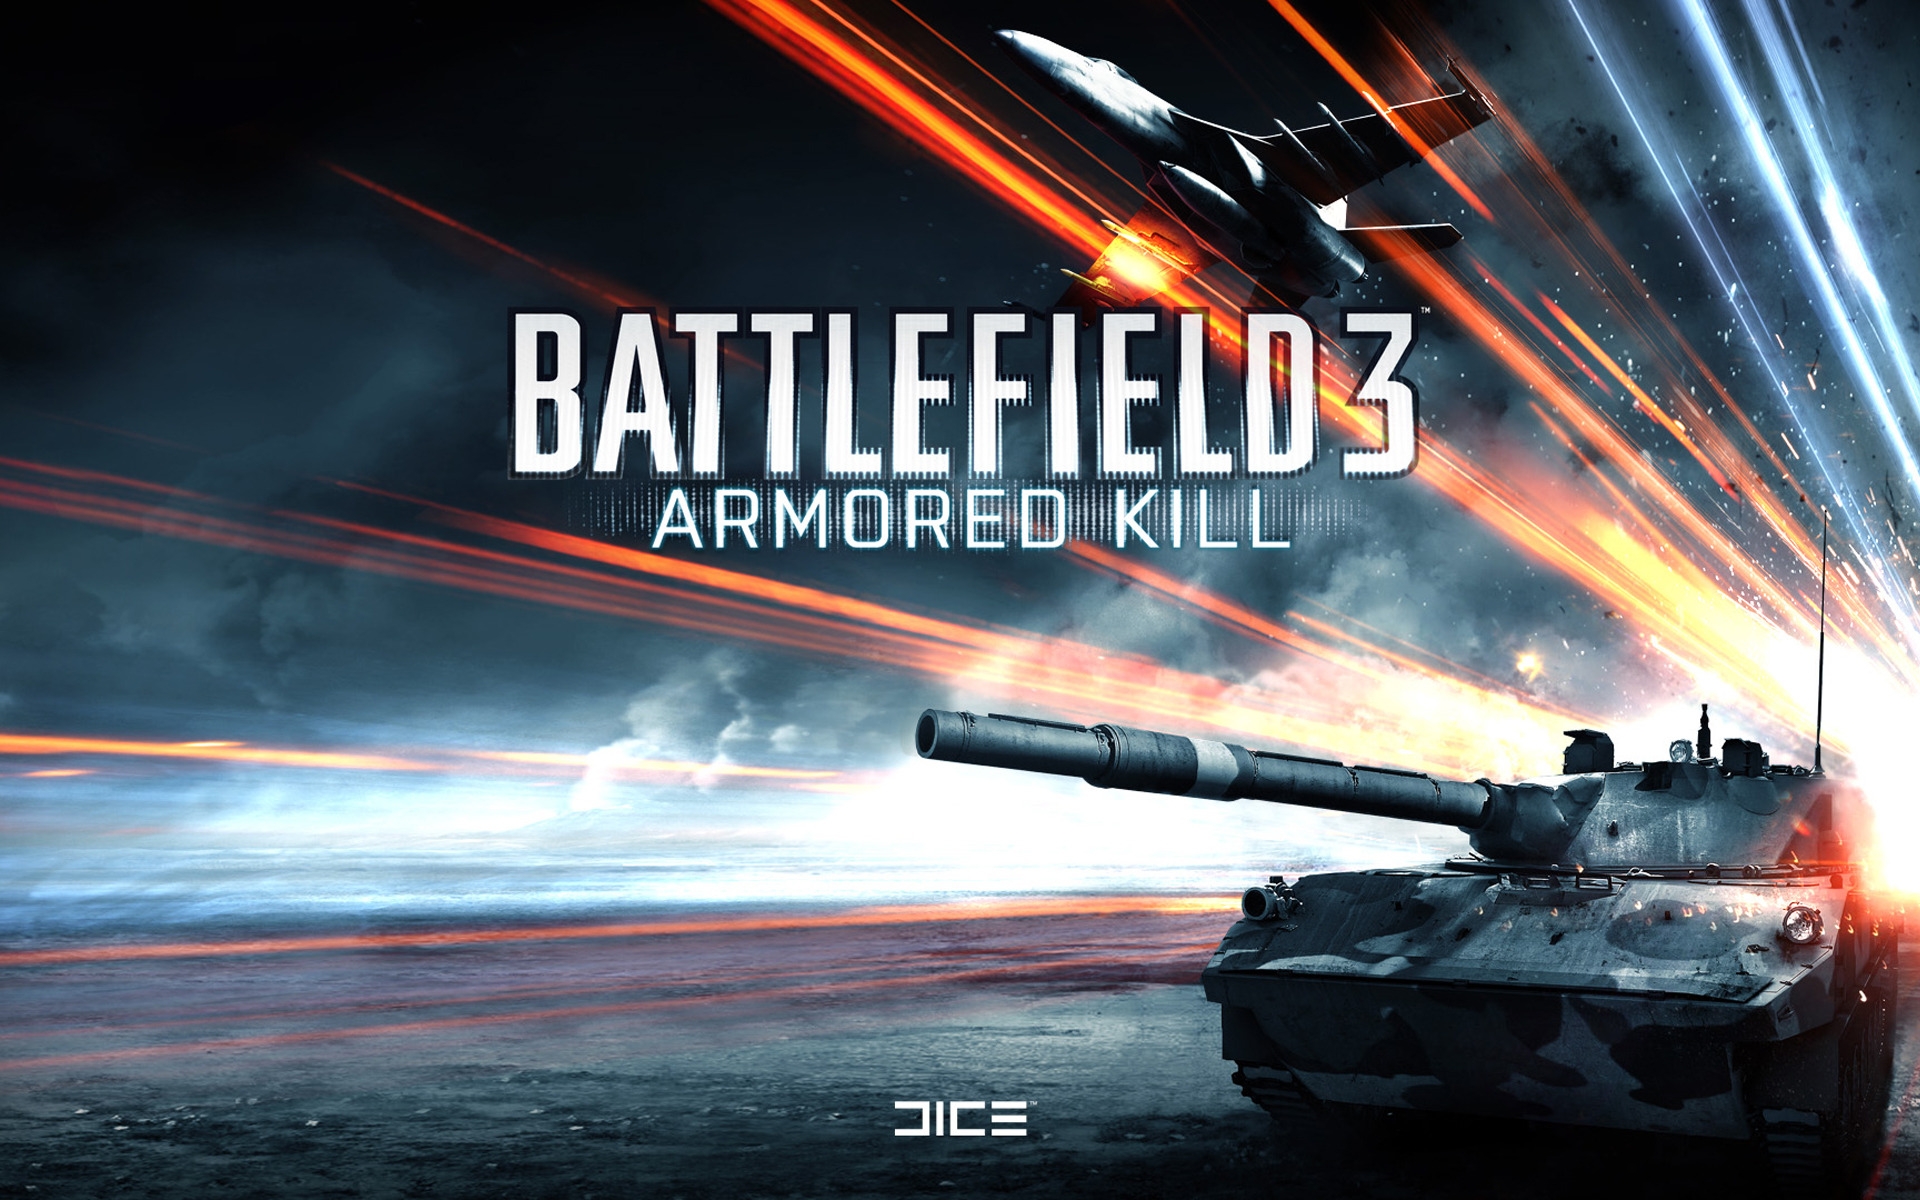 Battlefield 3 Armored Kill for 1920 x 1200 widescreen resolution